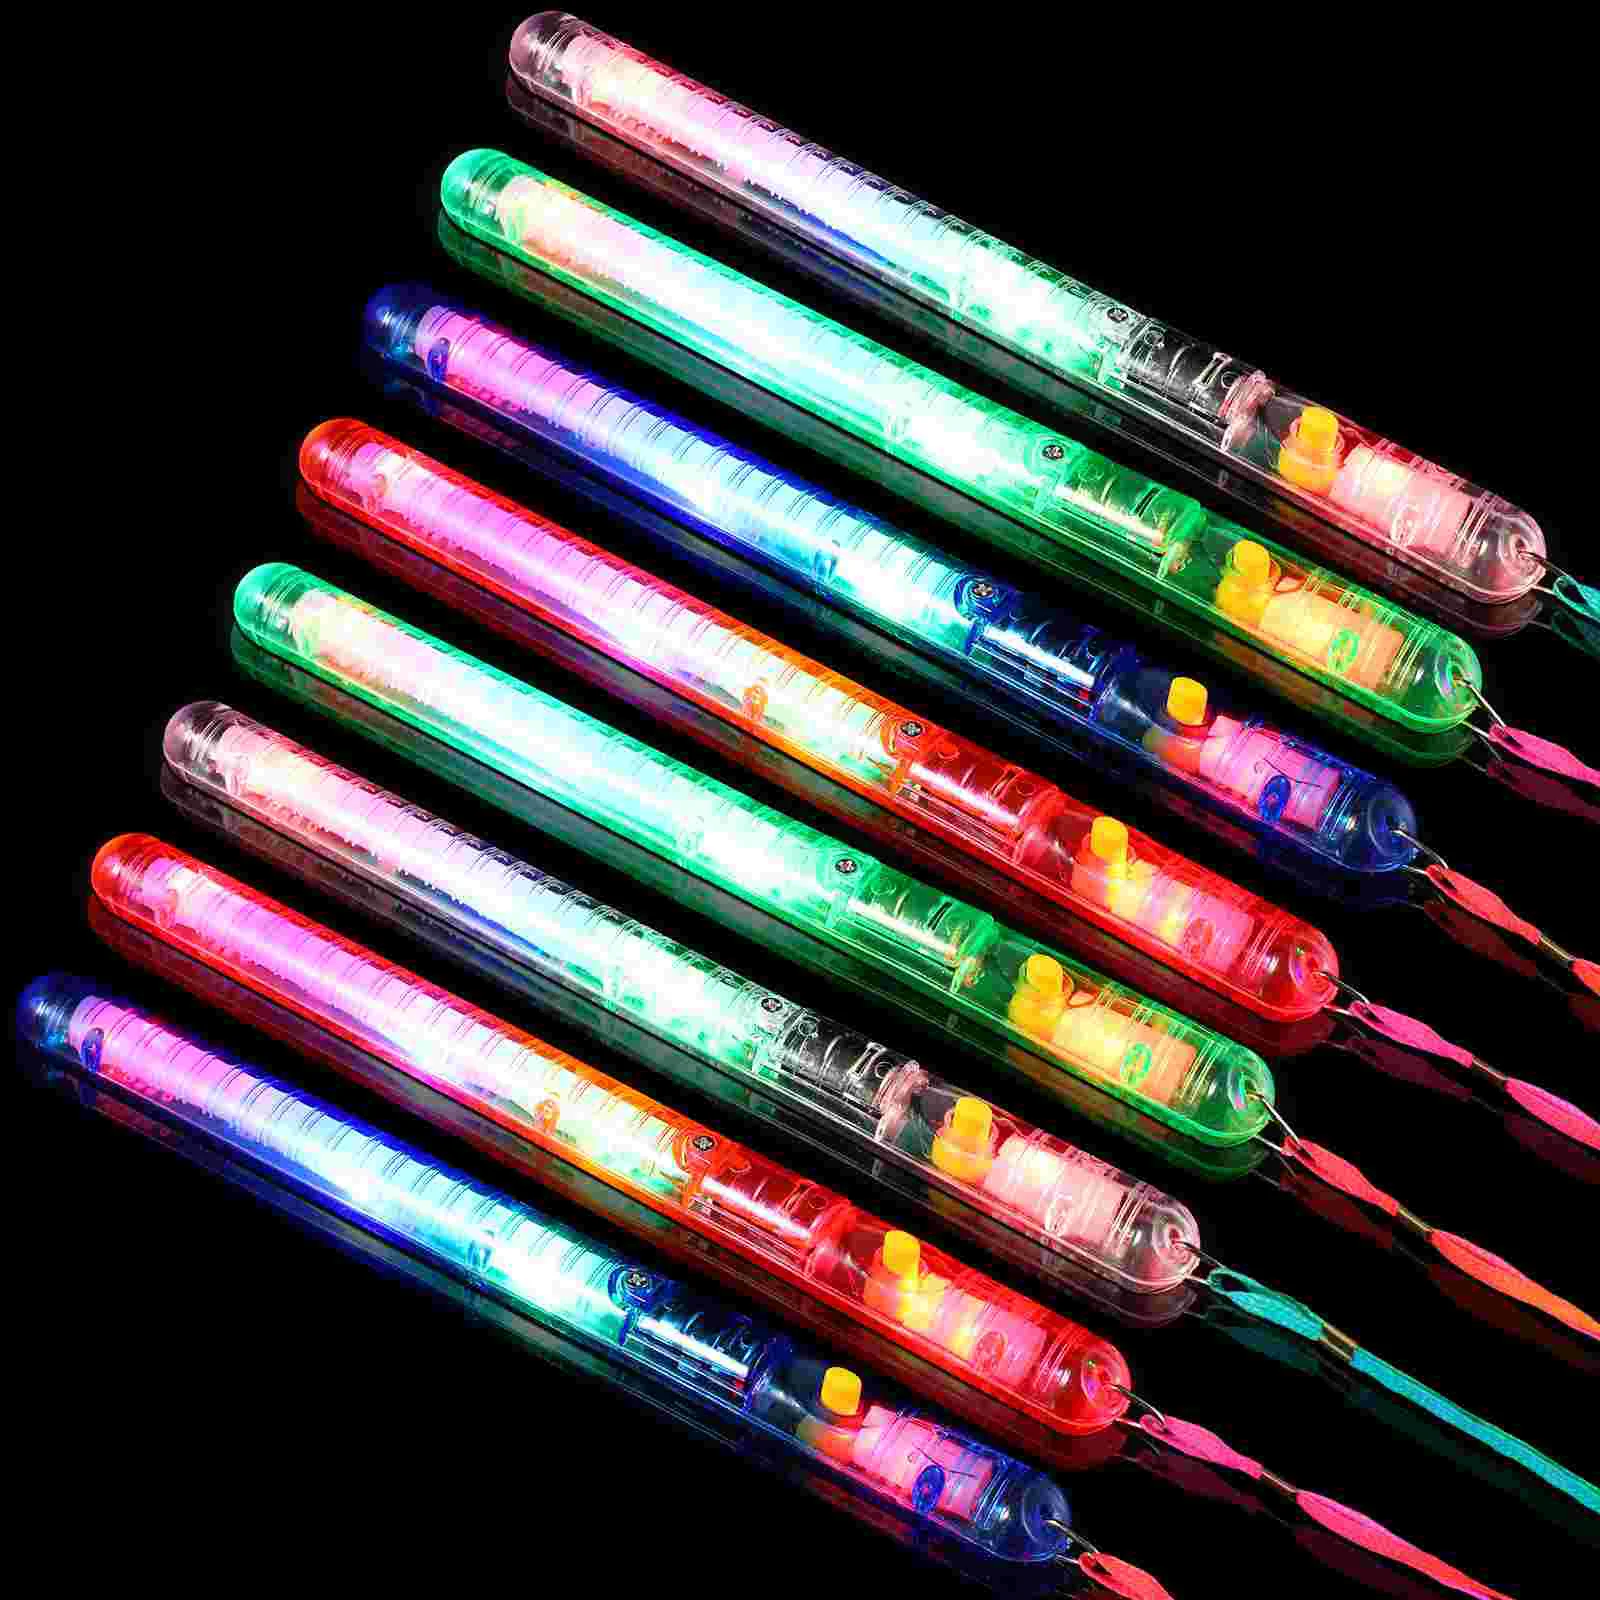 

12 Pcs Glow Sticks Kids Party Favor Colorful Shine Light Wand LED Weddings Glowing Child